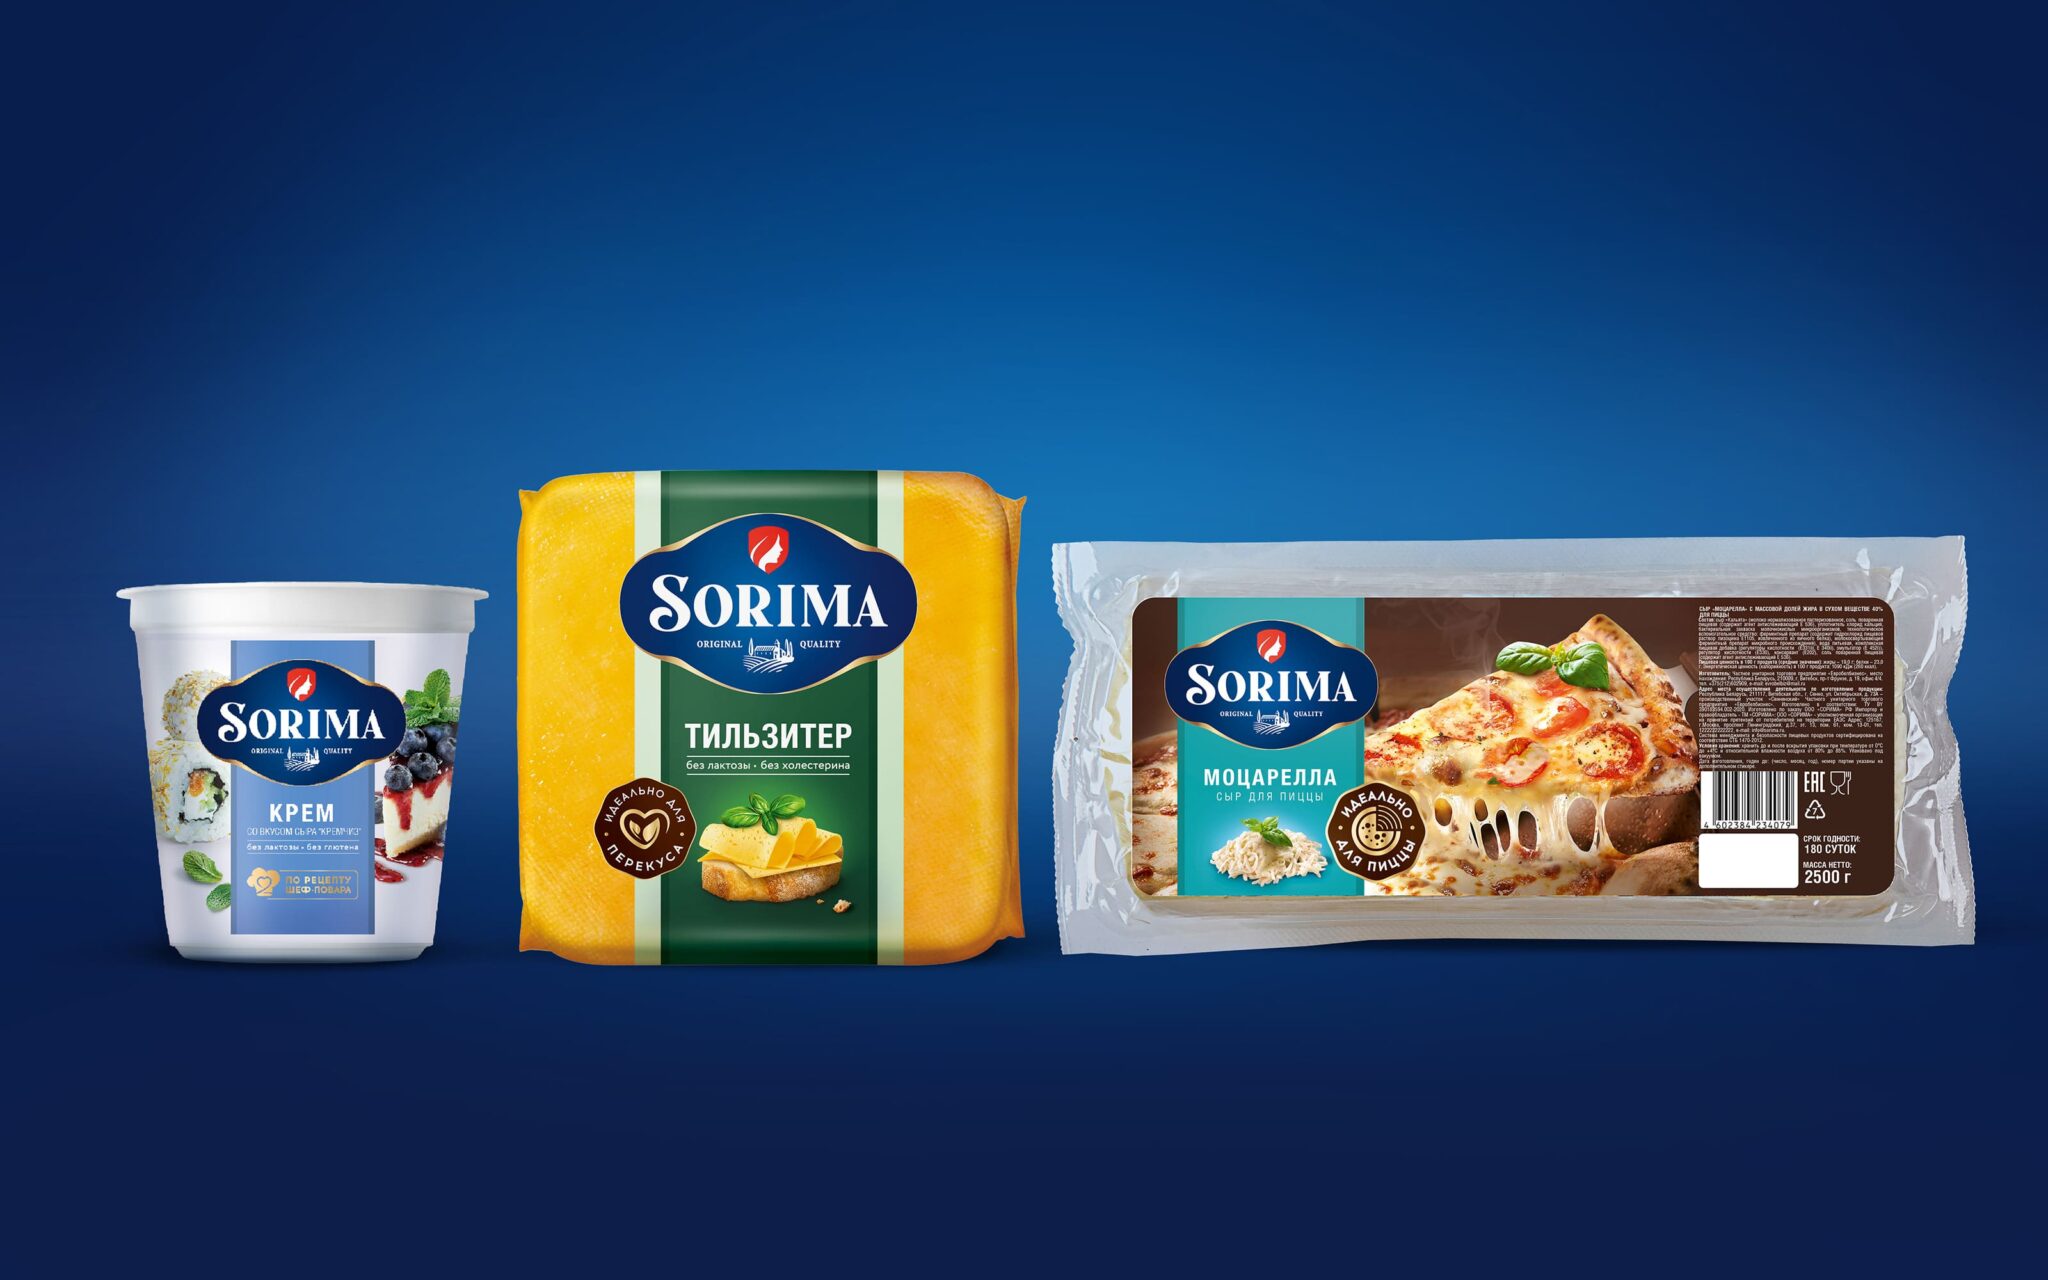 Sorima 系列食品品牌logo设计包装设计，徽章logo与标签包装版式